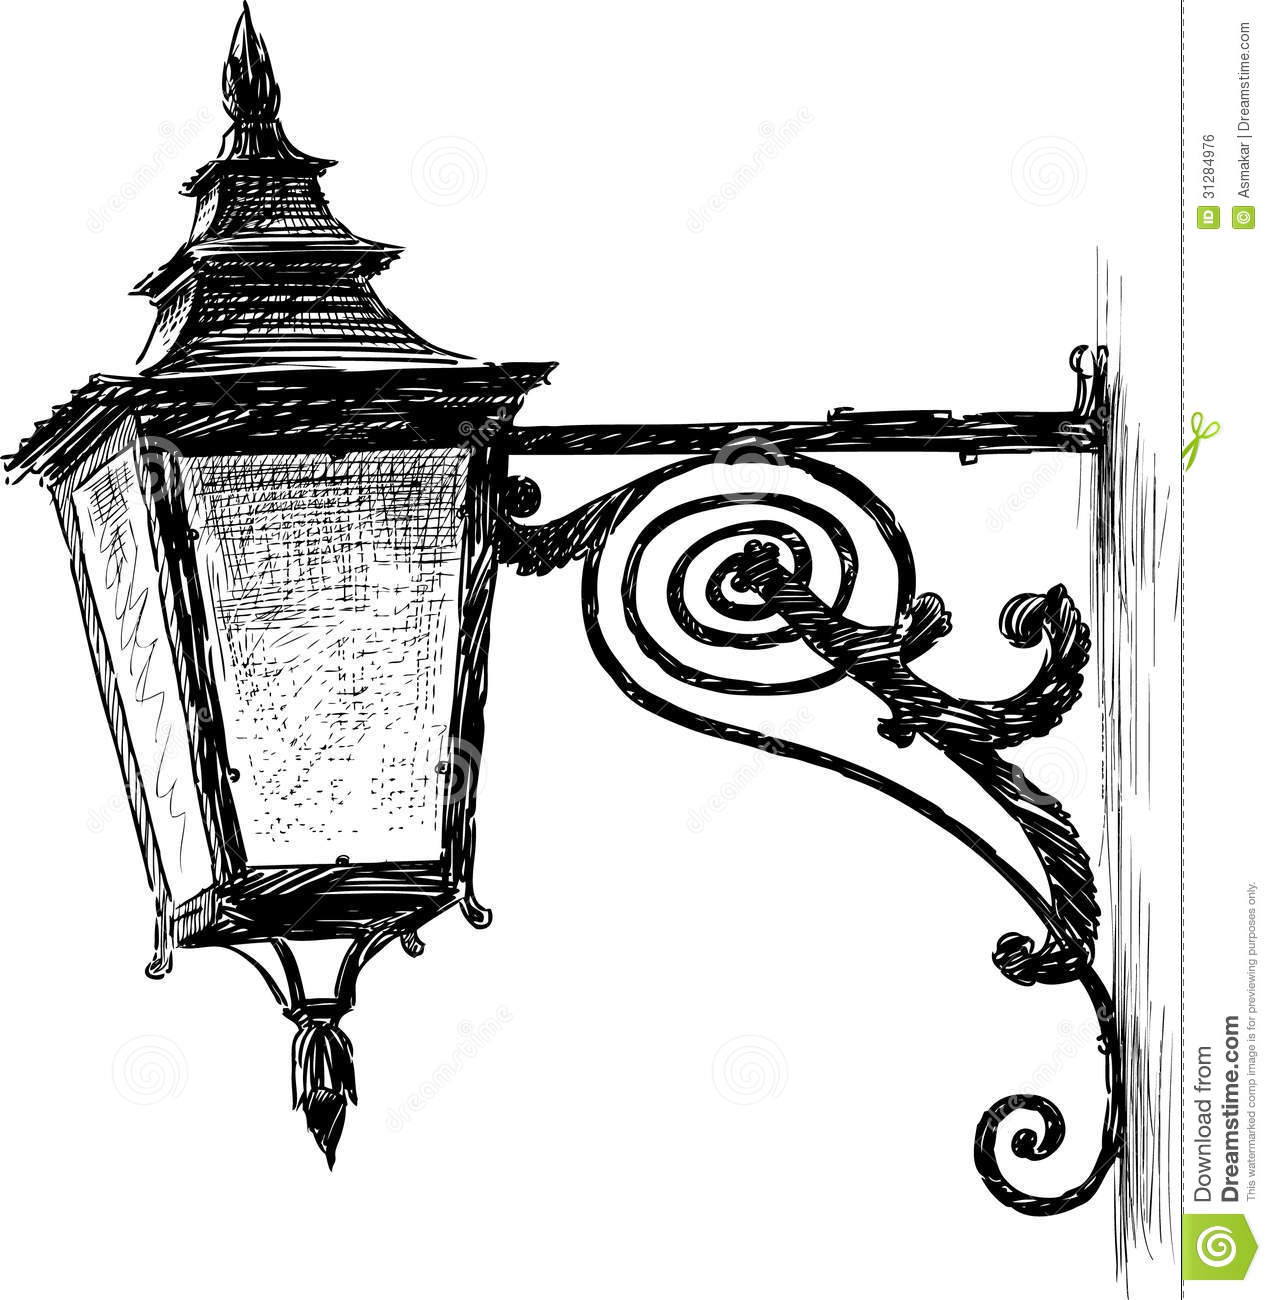 Antique Lantern Royalty Free Stock Image   Image  31284976